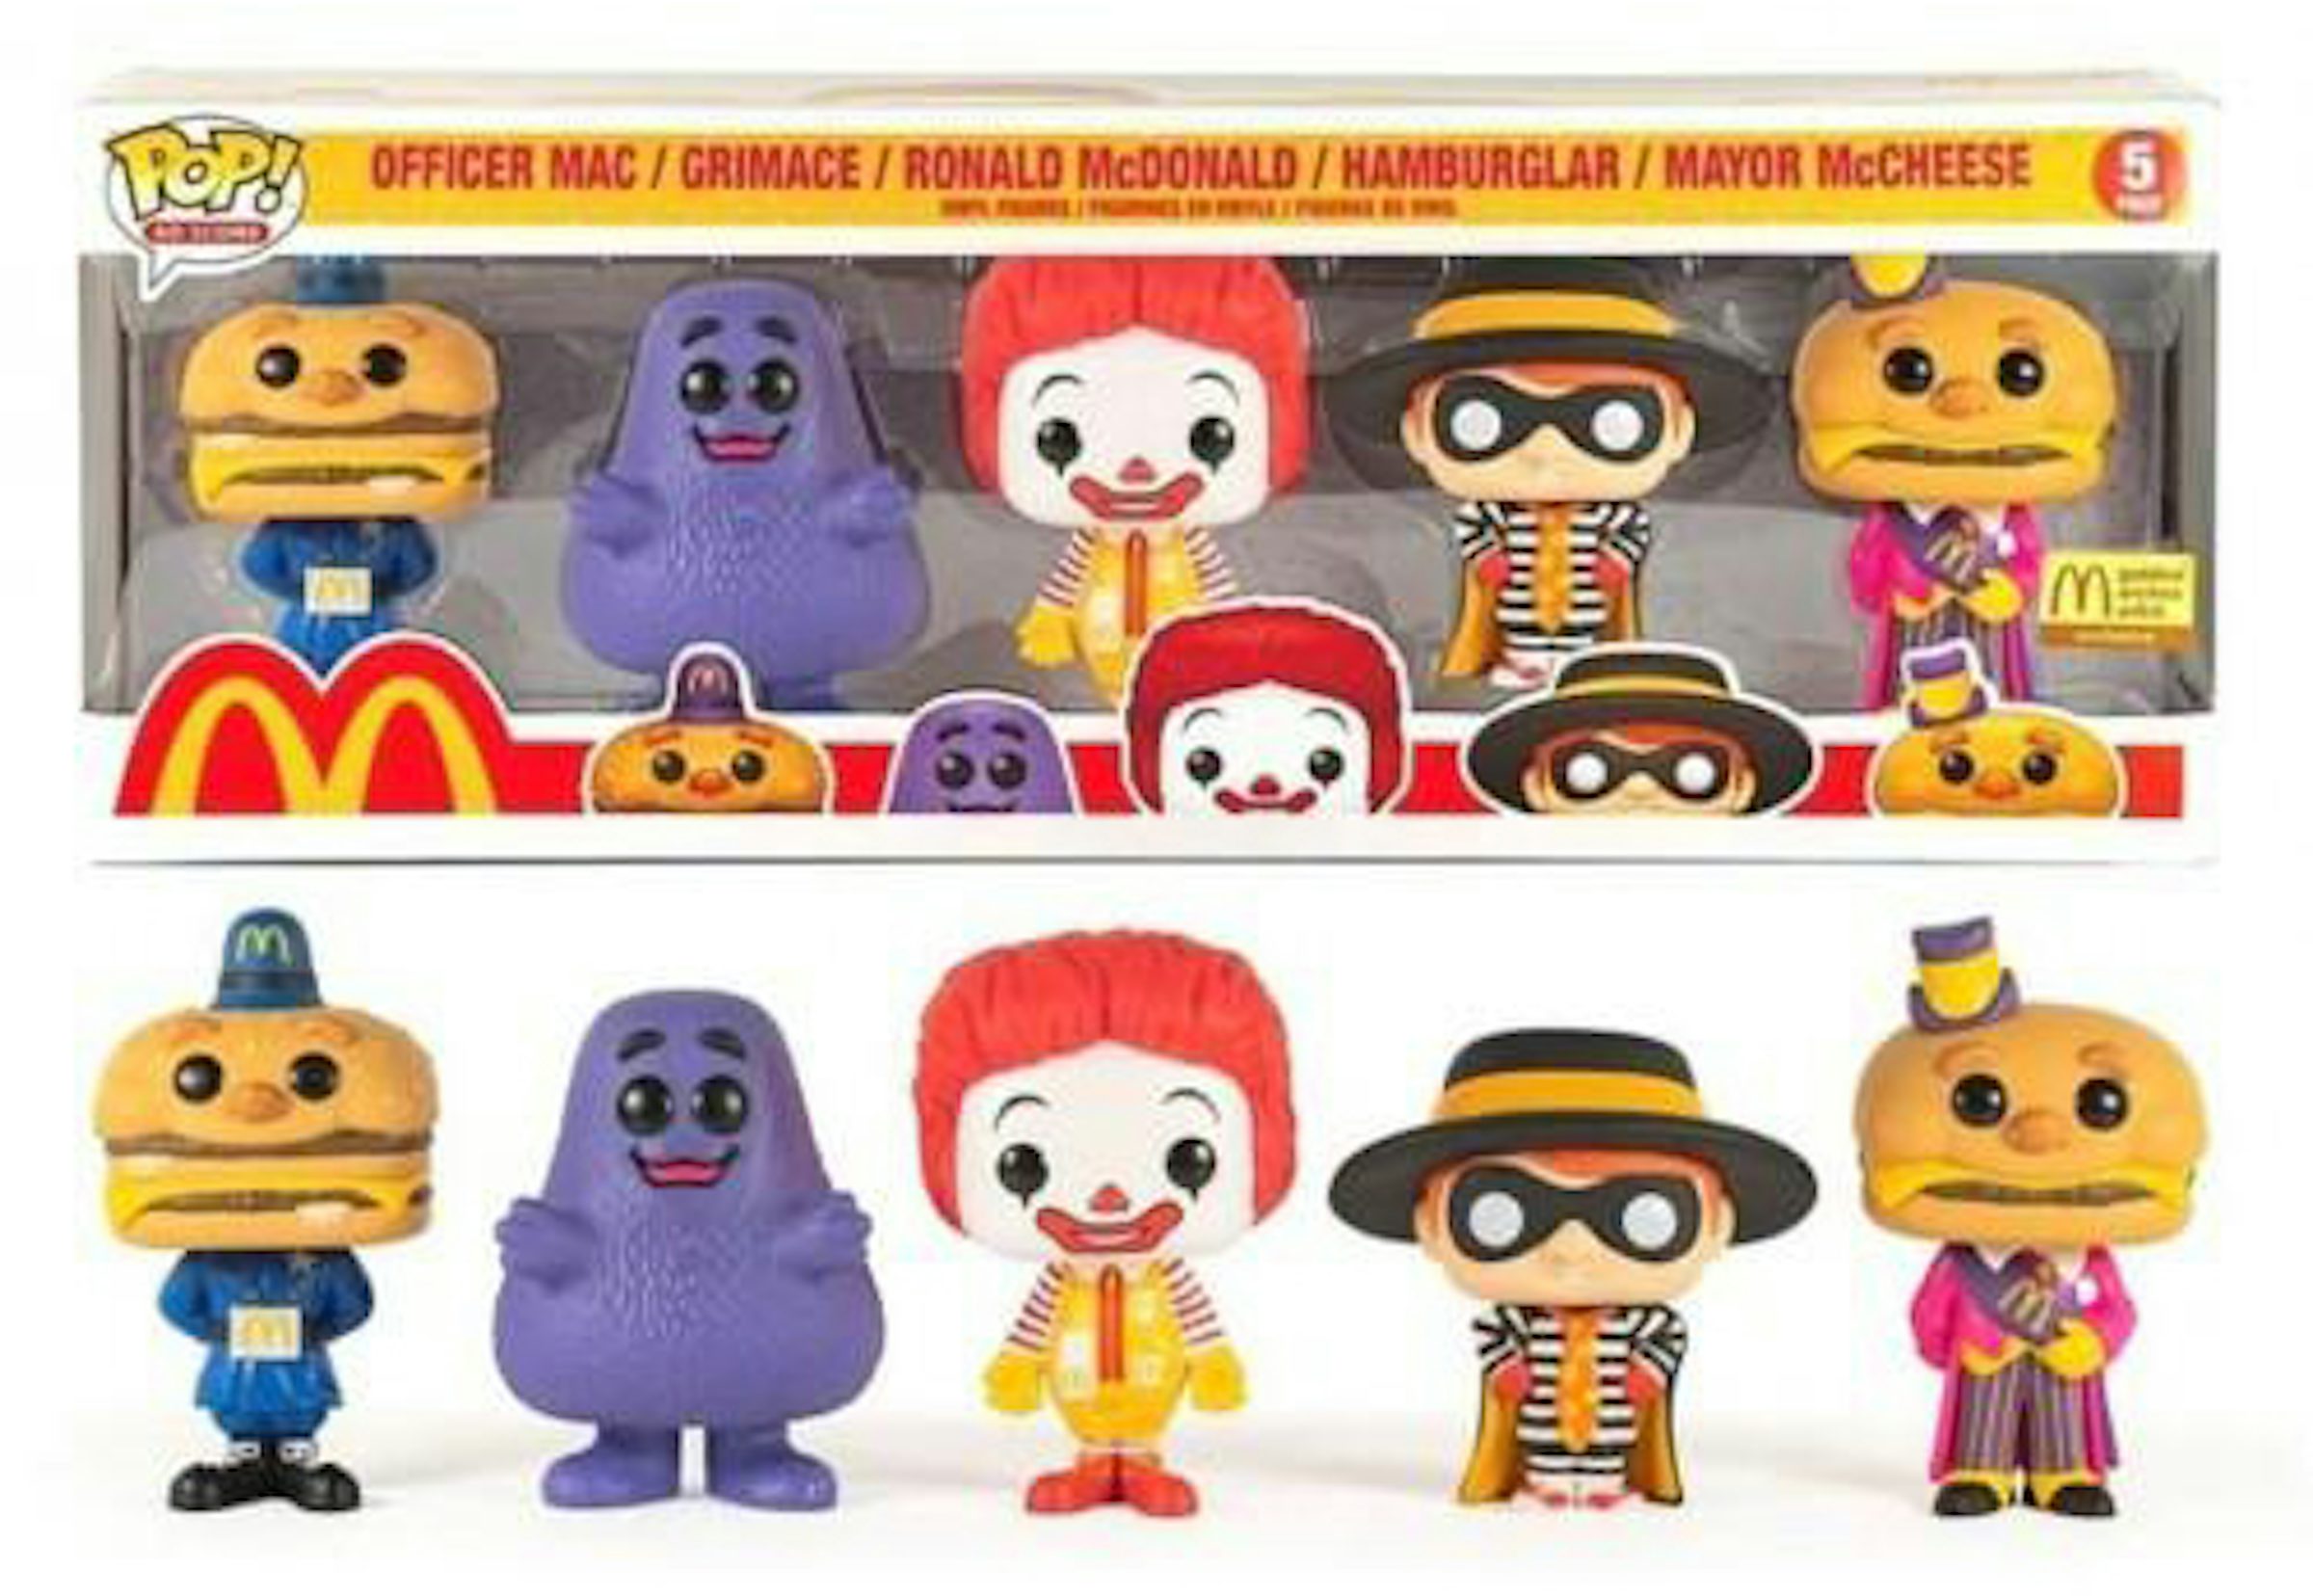 Funko Pop! Ad Icons McDonalds Officer Mac/Grimace/Ronald McDonald